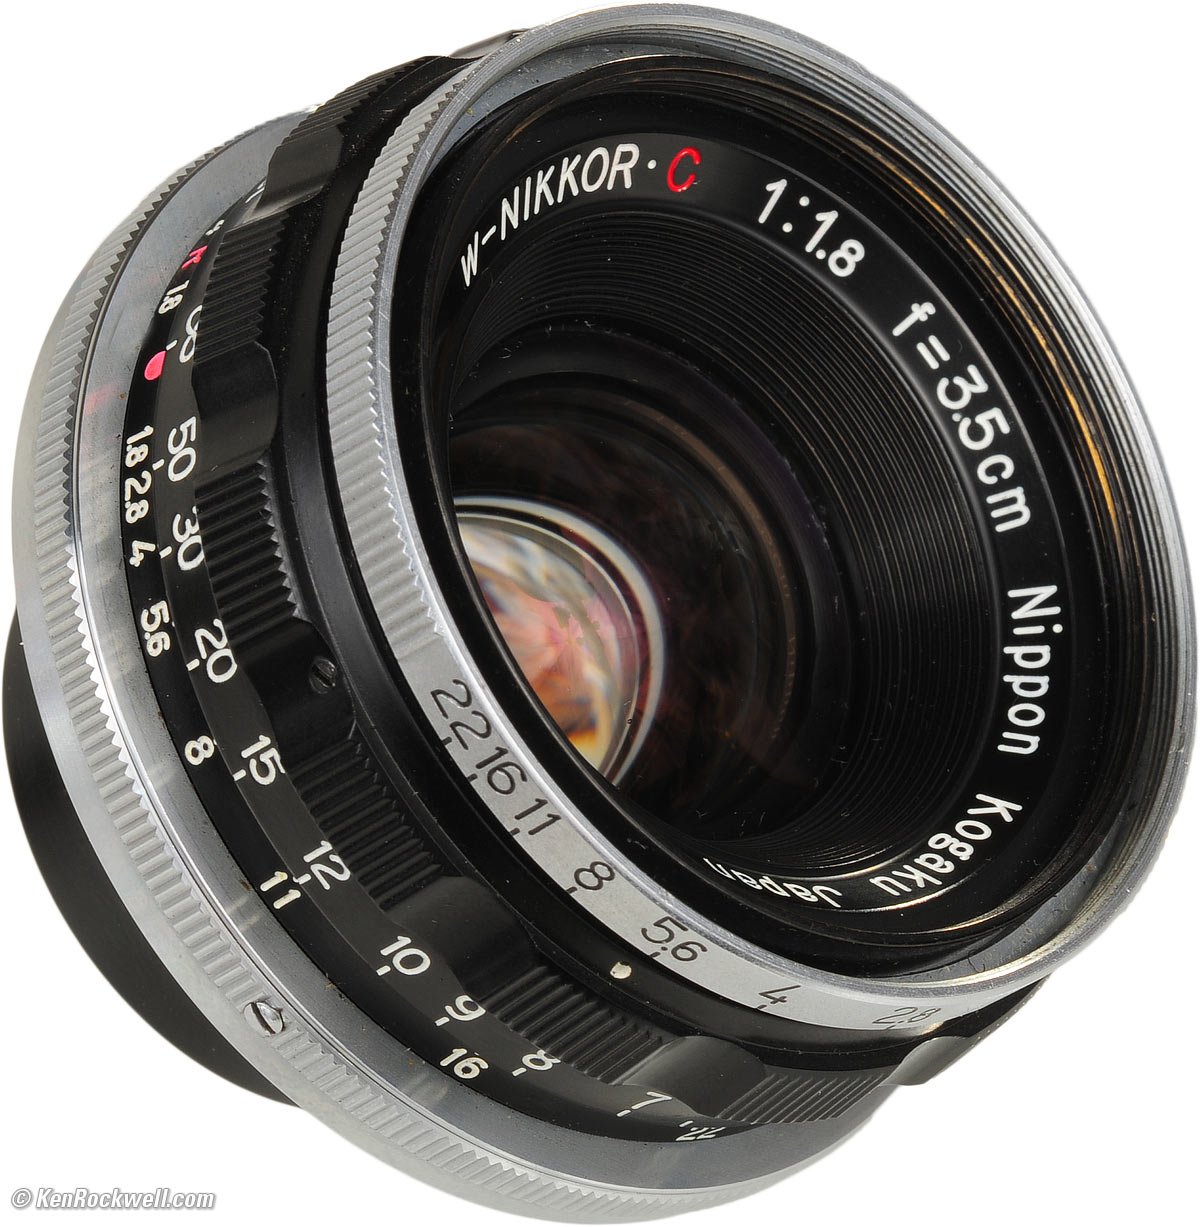 Nikon 3.5cm (35mm) f/1.8 W-NIKKOR•C Review